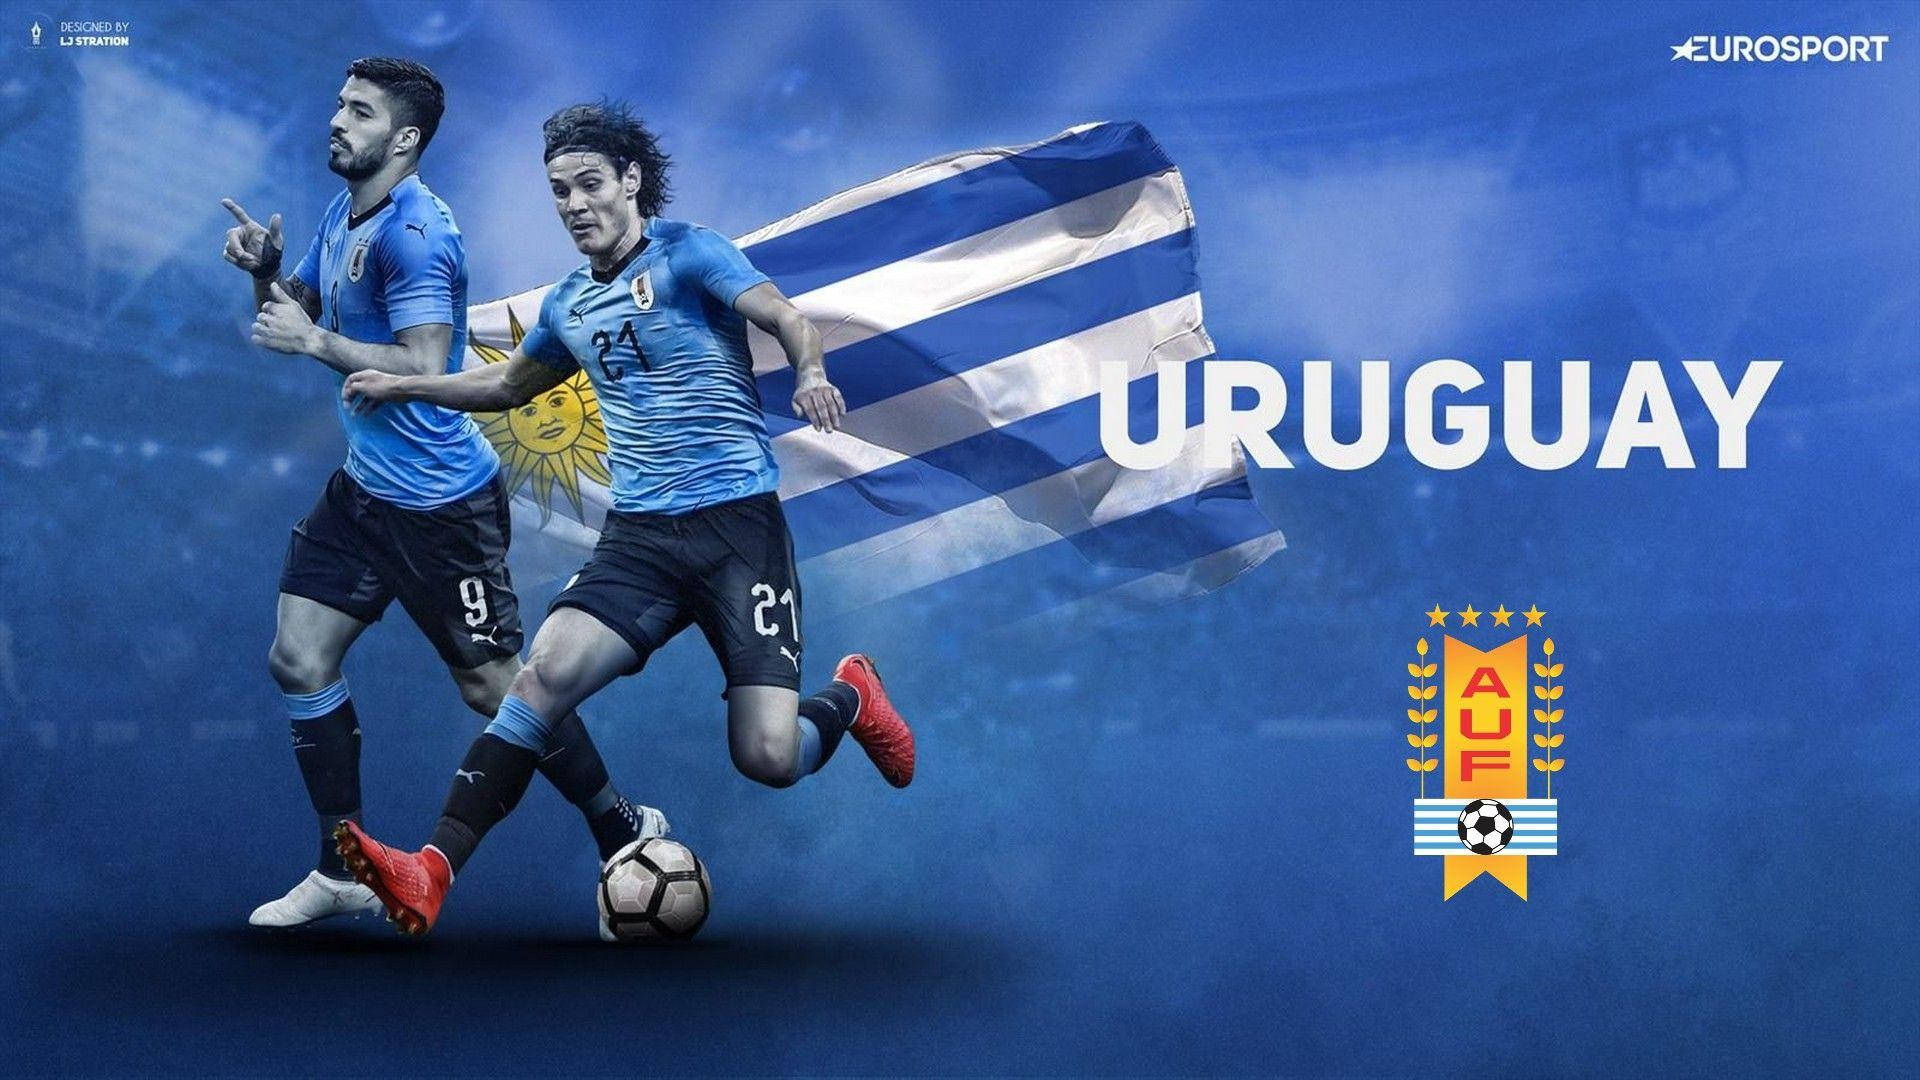 Uruguay Football Star Players